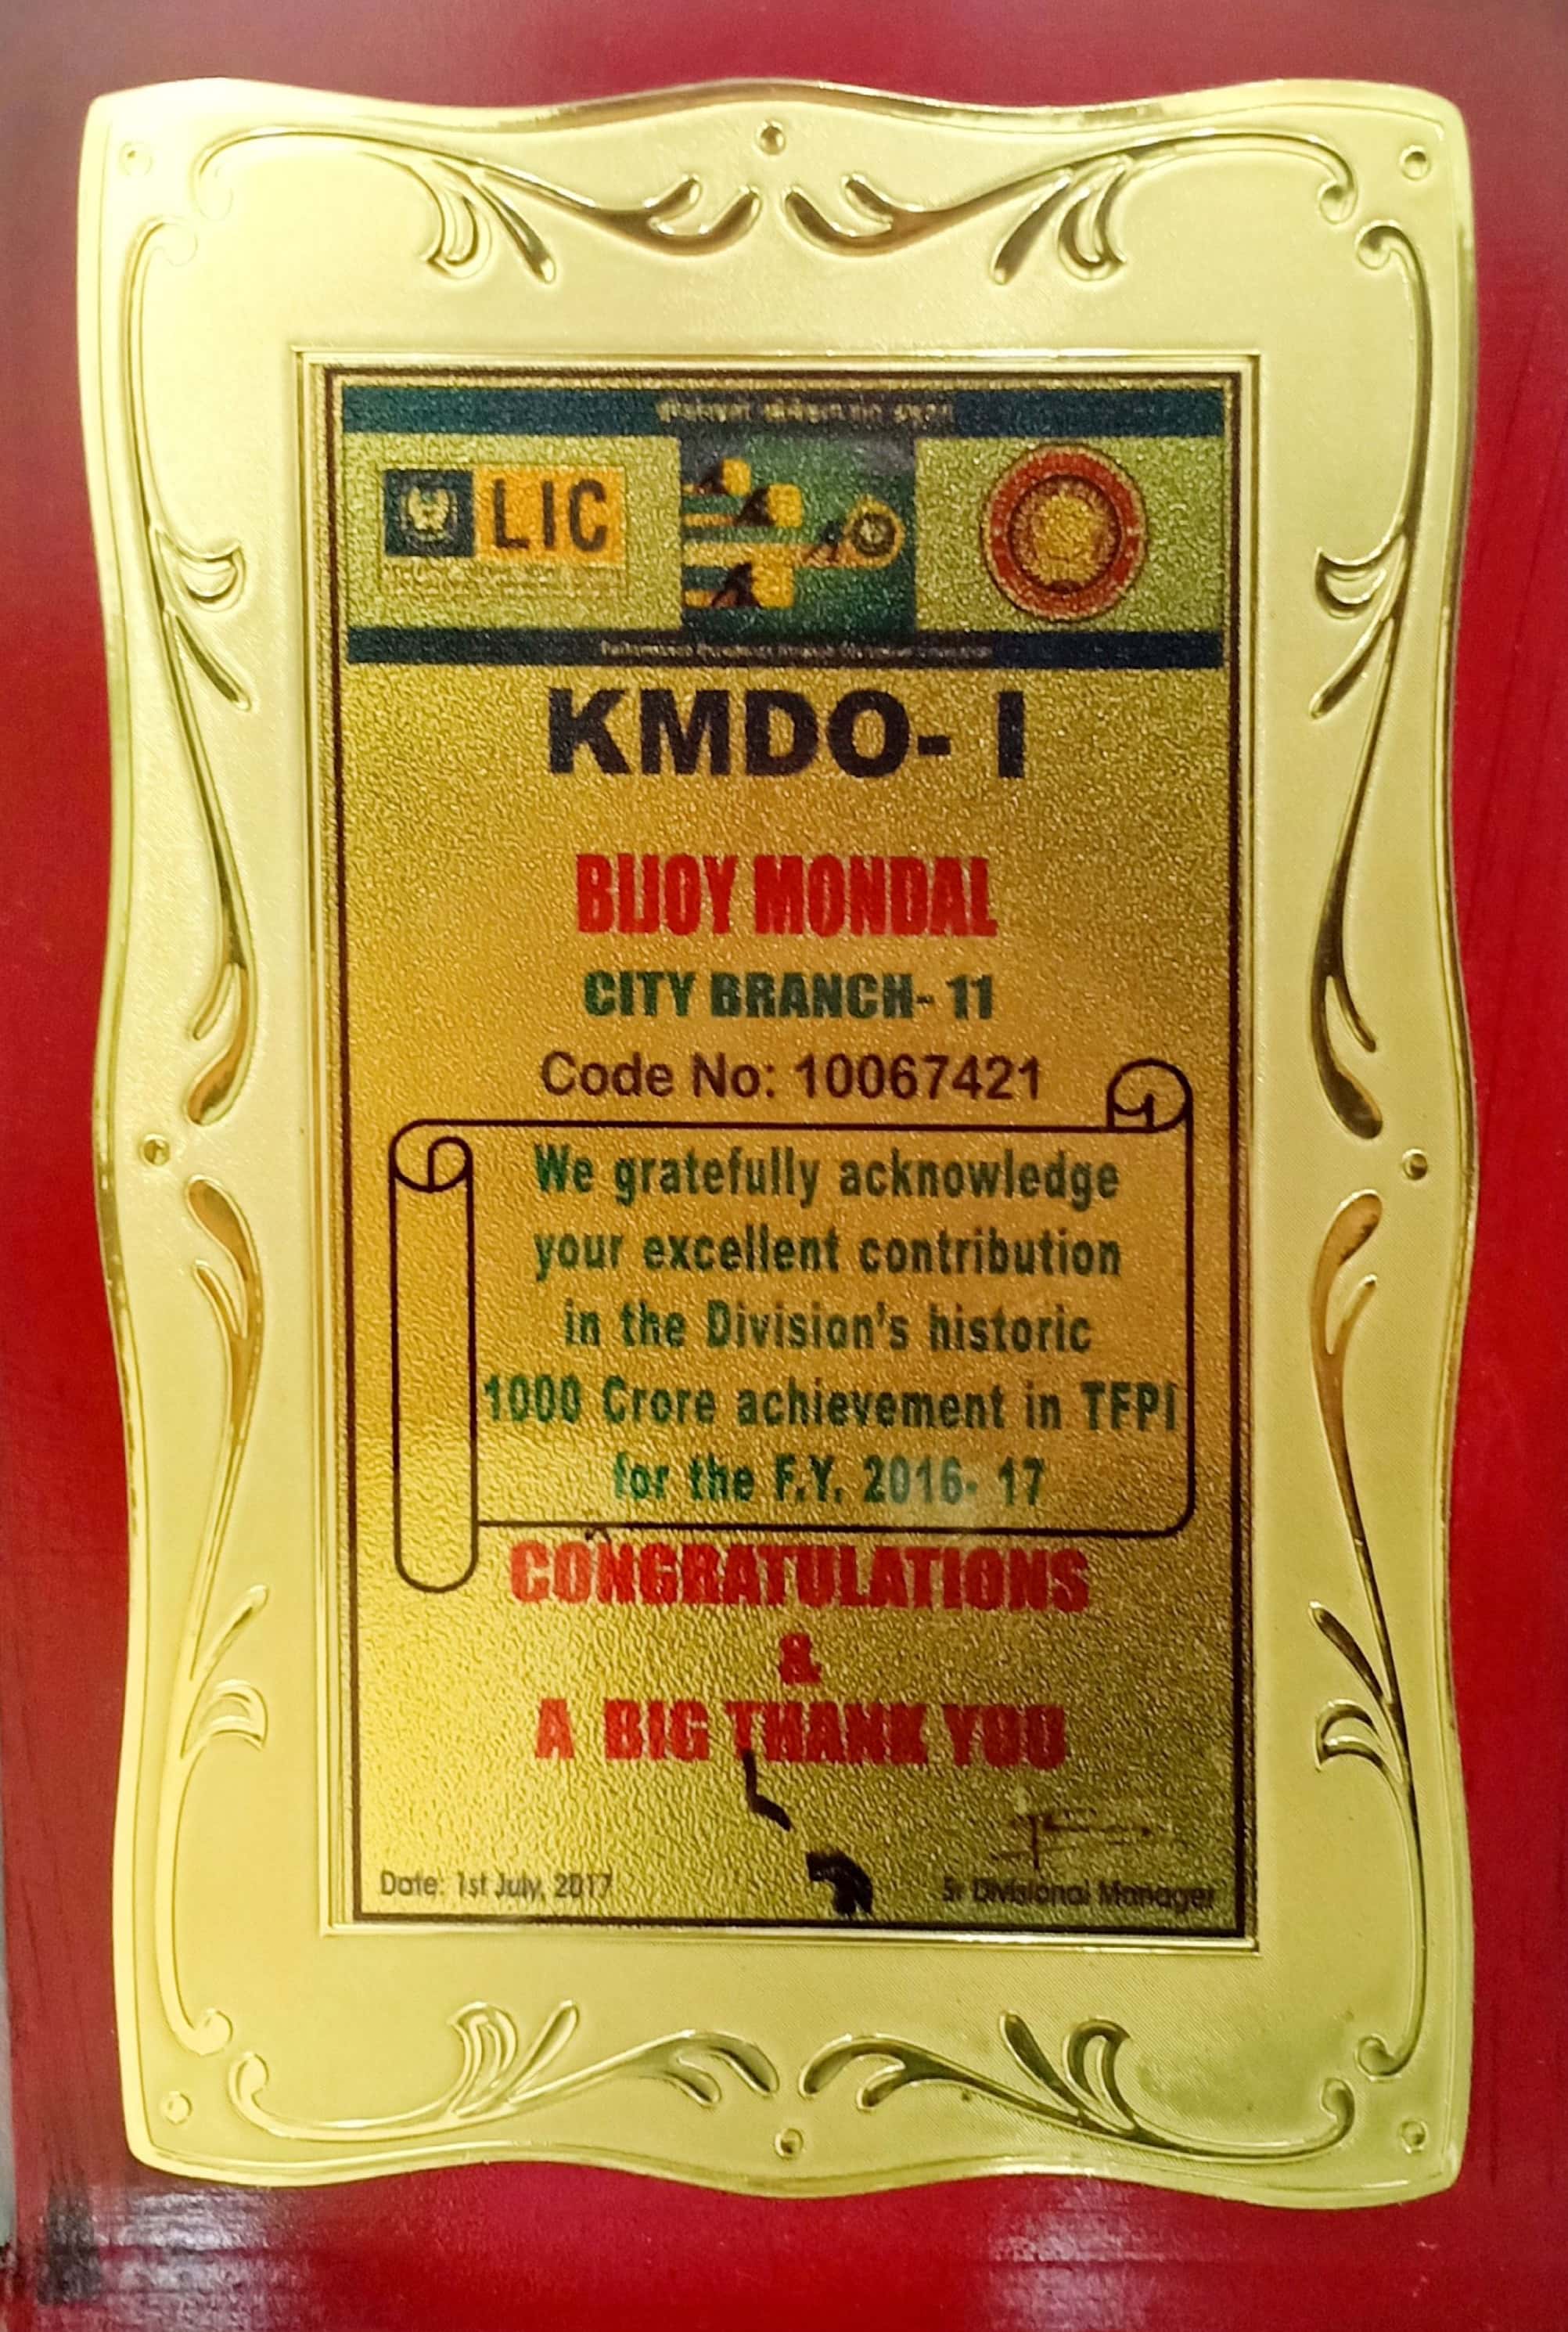 Congratulation trophy by KMDO - 1